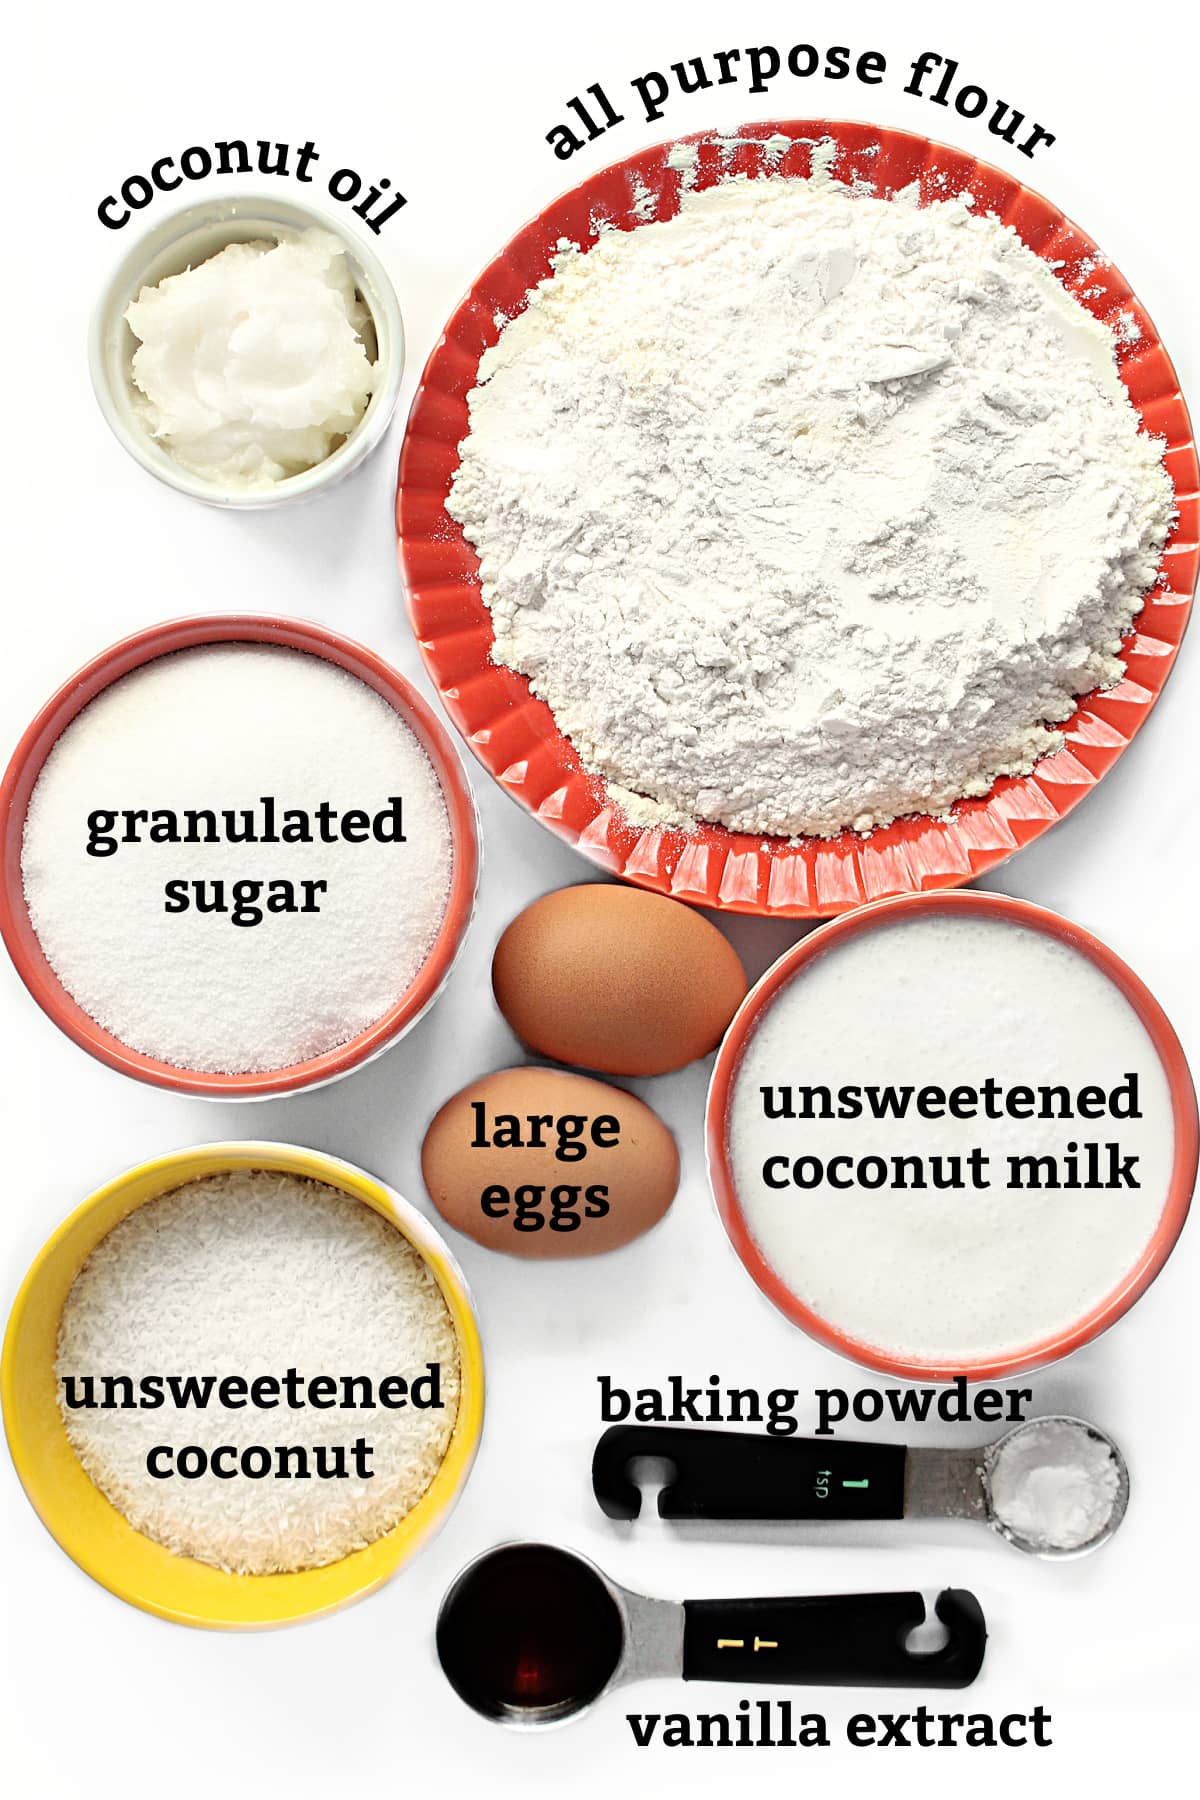 Ingredients: coconut oil, flour, sugar, eggs, unsweetened coconut, unsweetened coconut milk, baking powder, vanilla. 